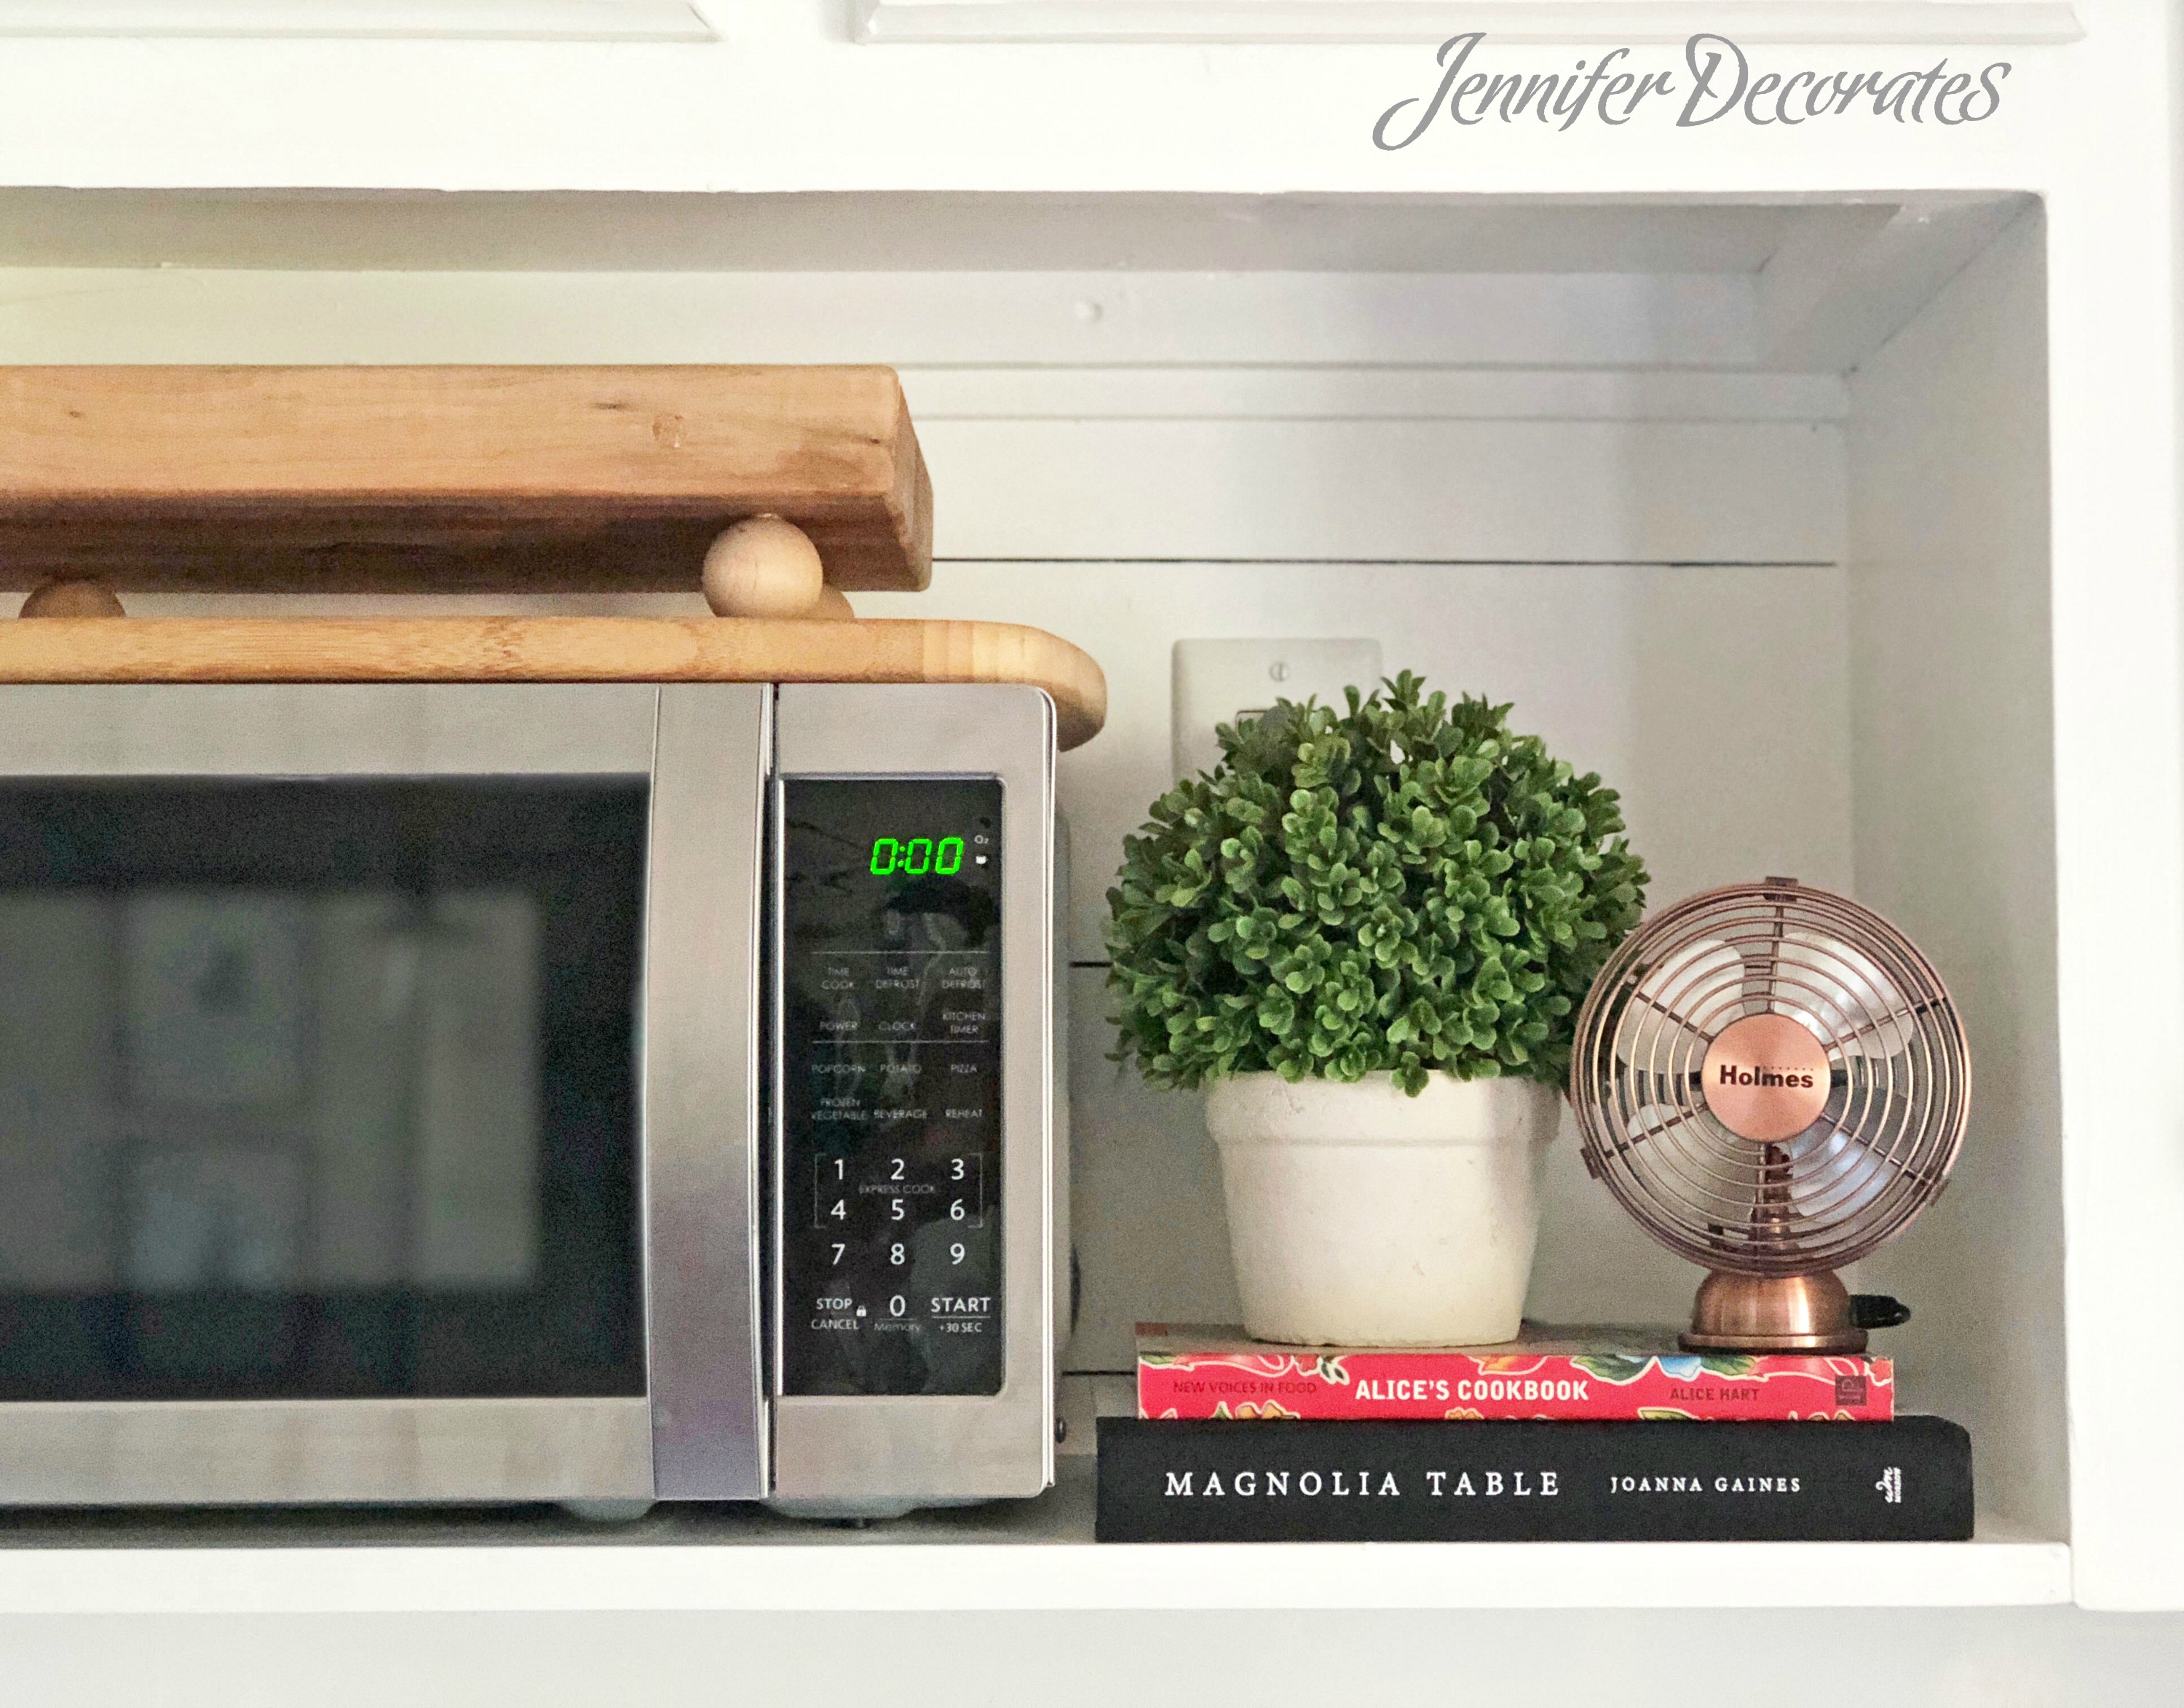 Kitchen accessorizing ideas from Jennifer Decorates